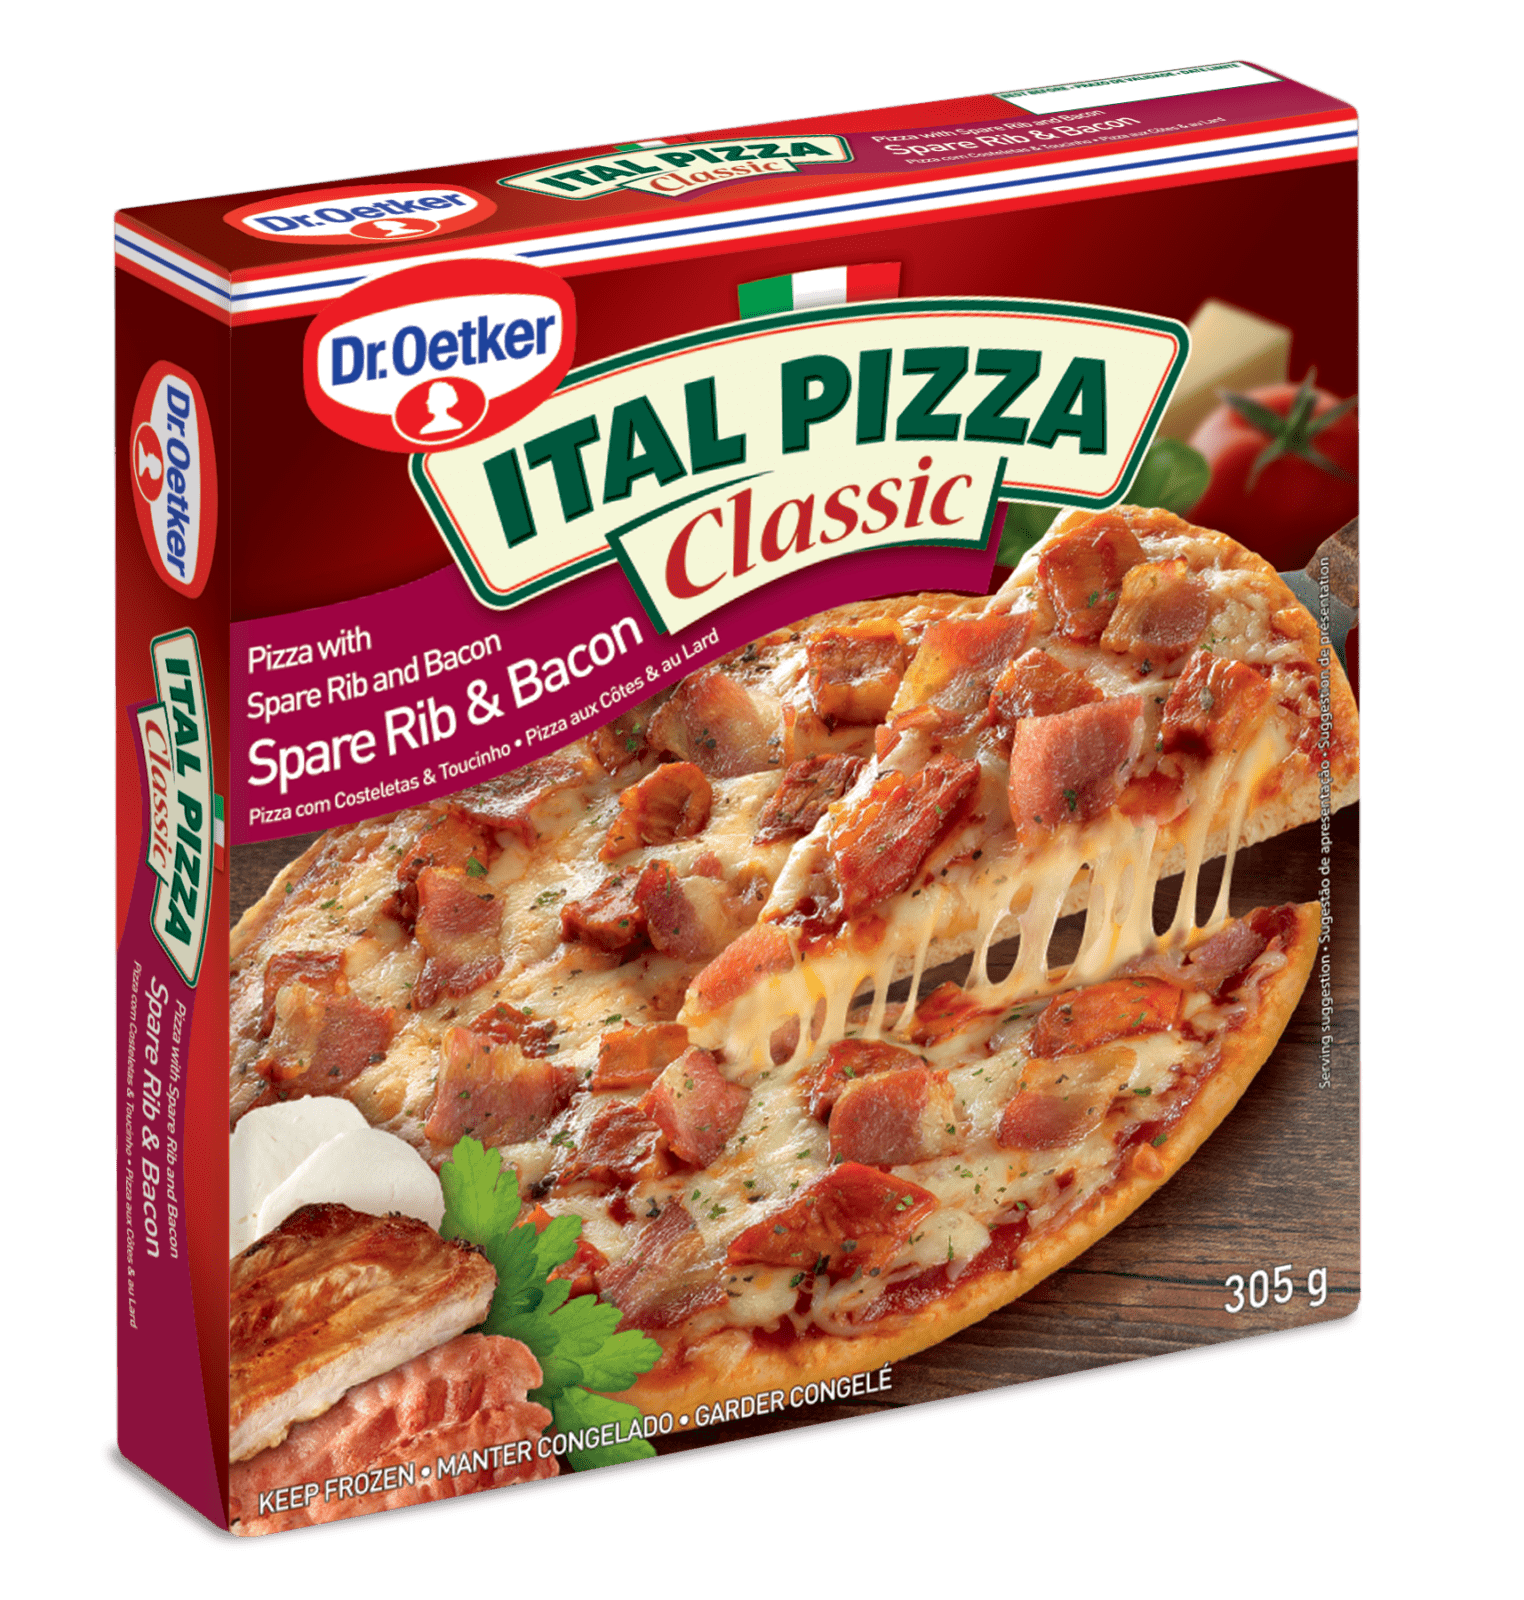 ItalPizza_Classic_SpareRib&Bacon